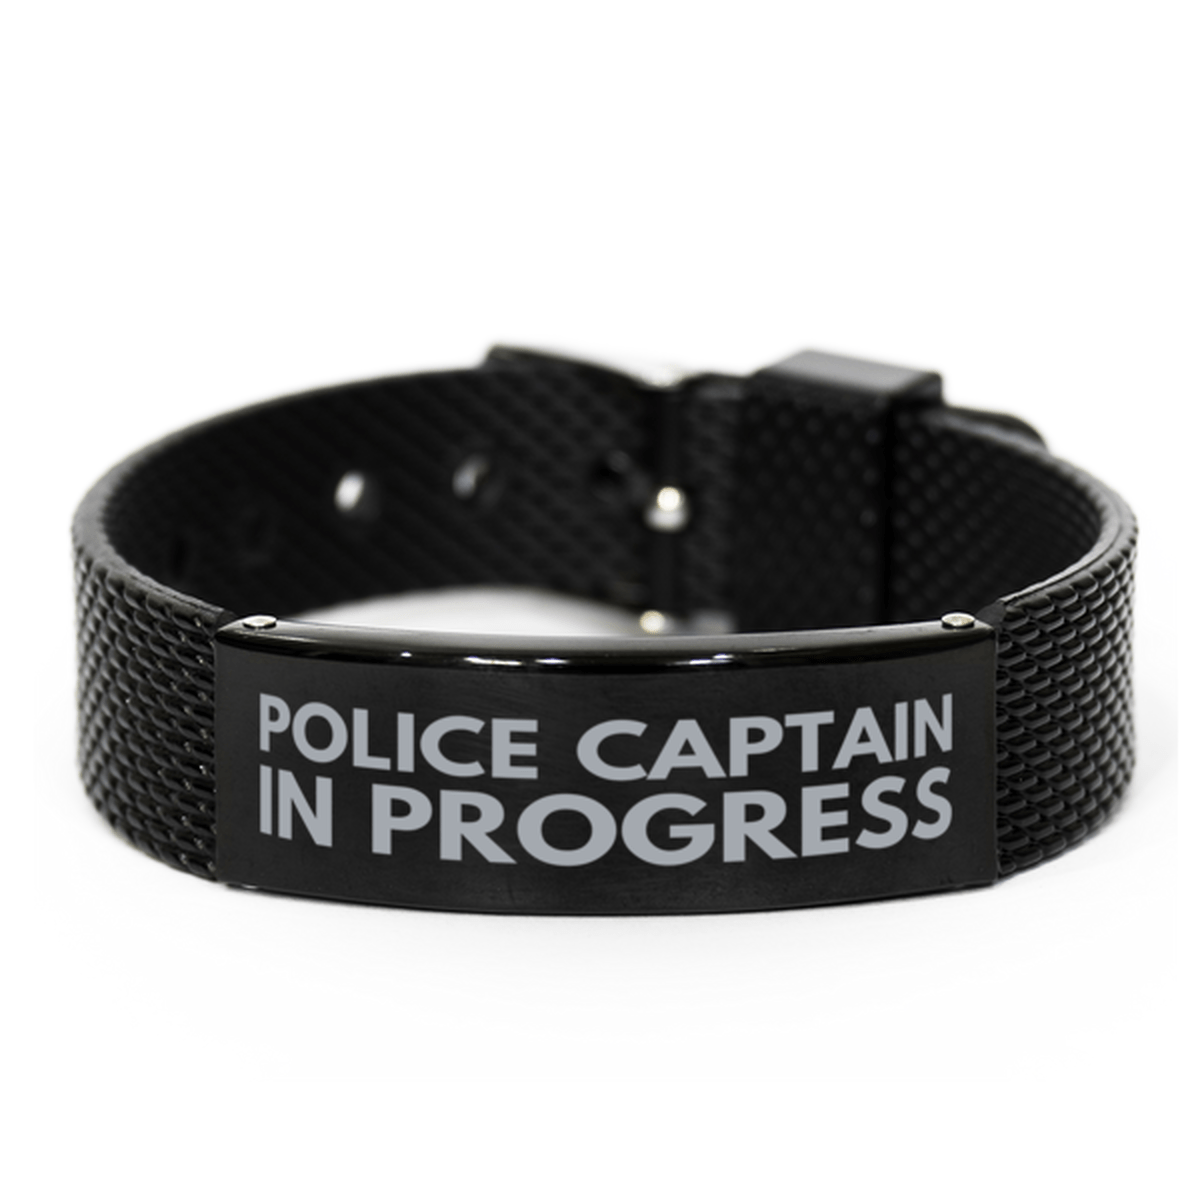 Inspirational Police Captain Black Shark Mesh Bracelet, Police Captain In Progress, Best Graduation Gifts for Students